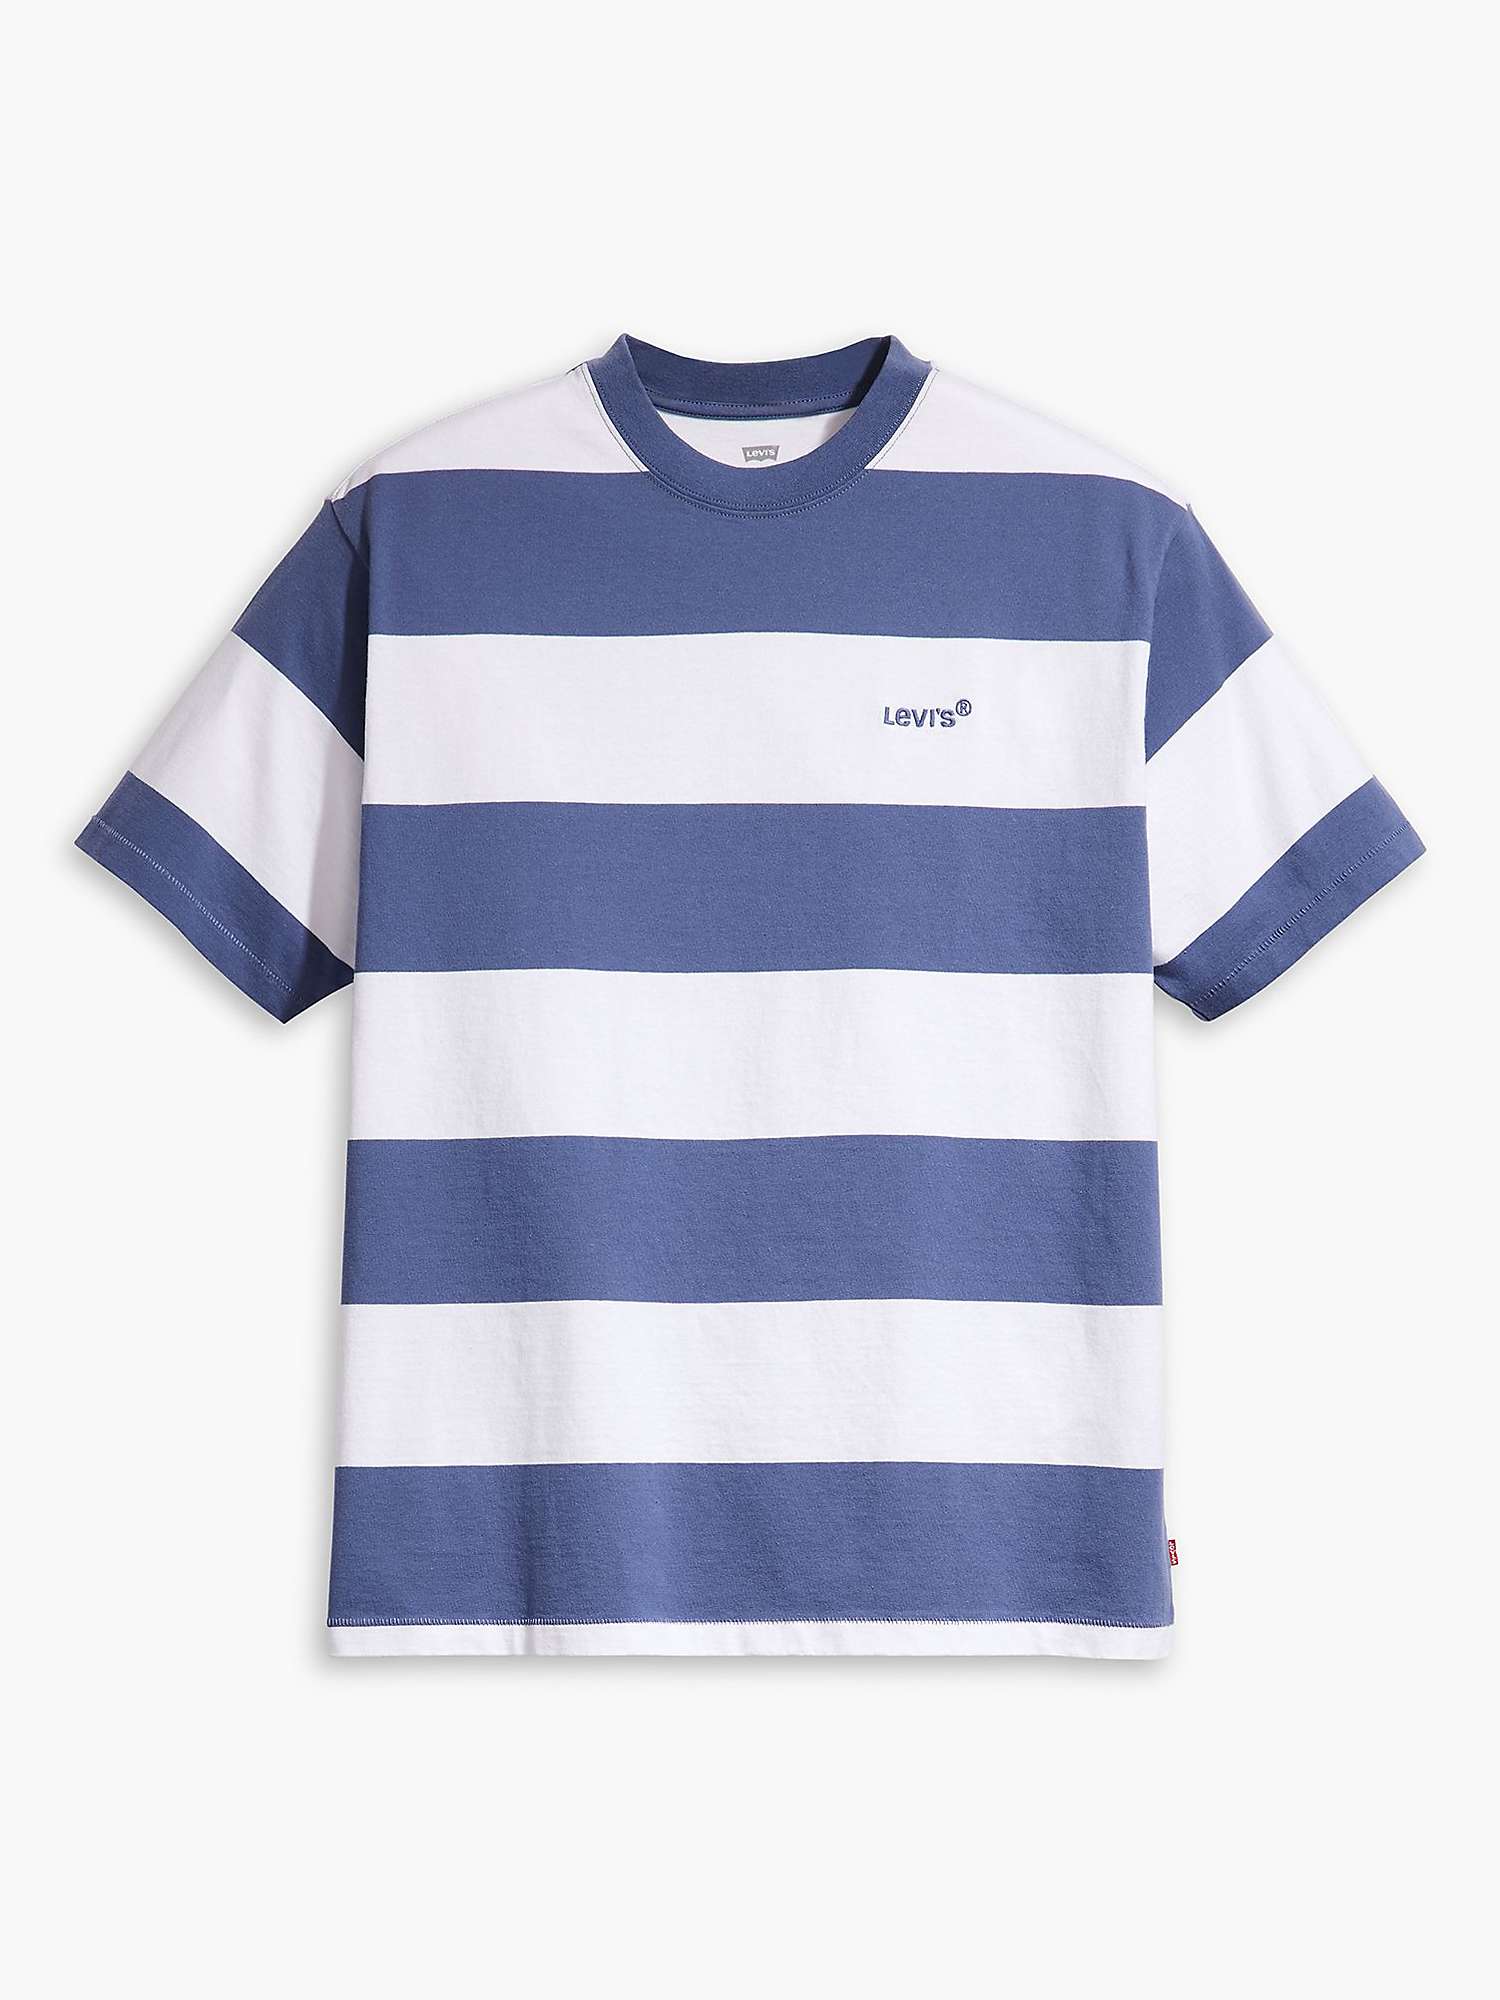 Buy Levi's Red Tab Vintage Stripe T-Shirt, Blue/White Online at johnlewis.com